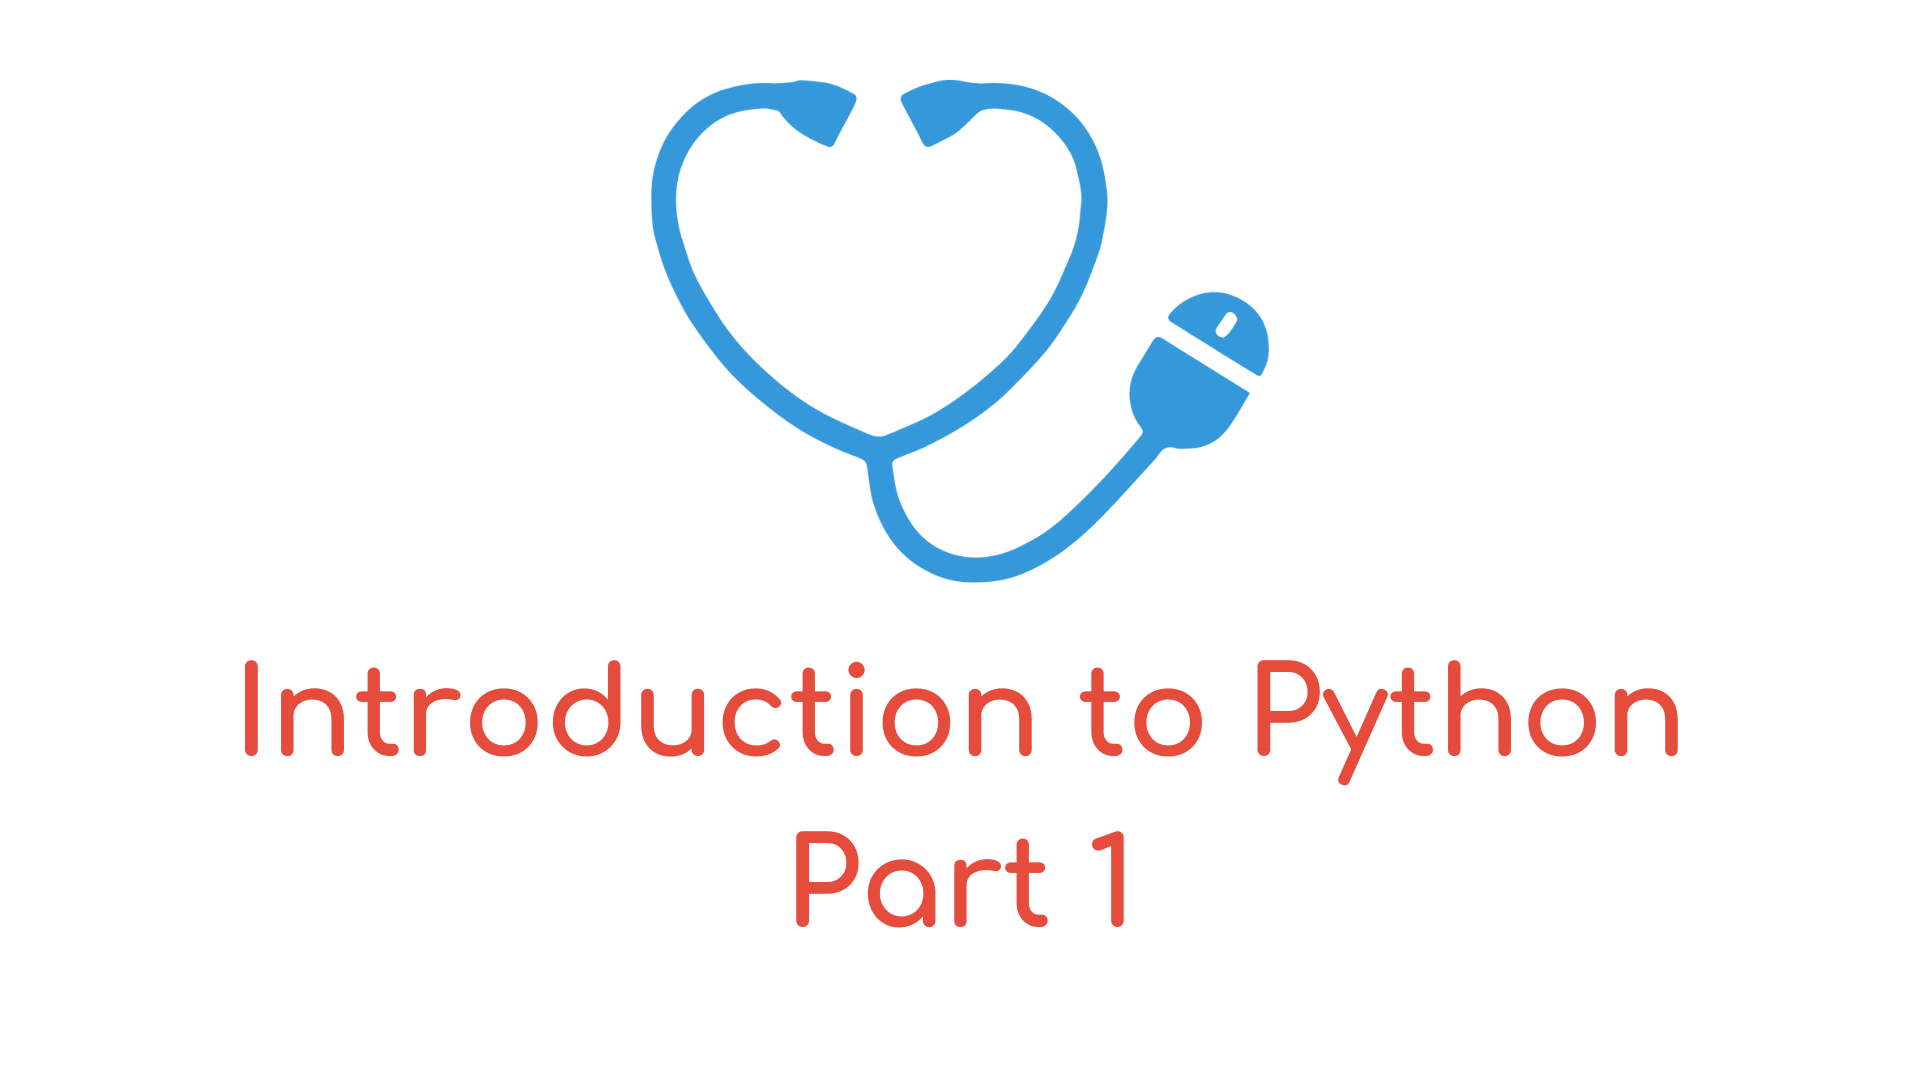 Intro to Python Pt. 1